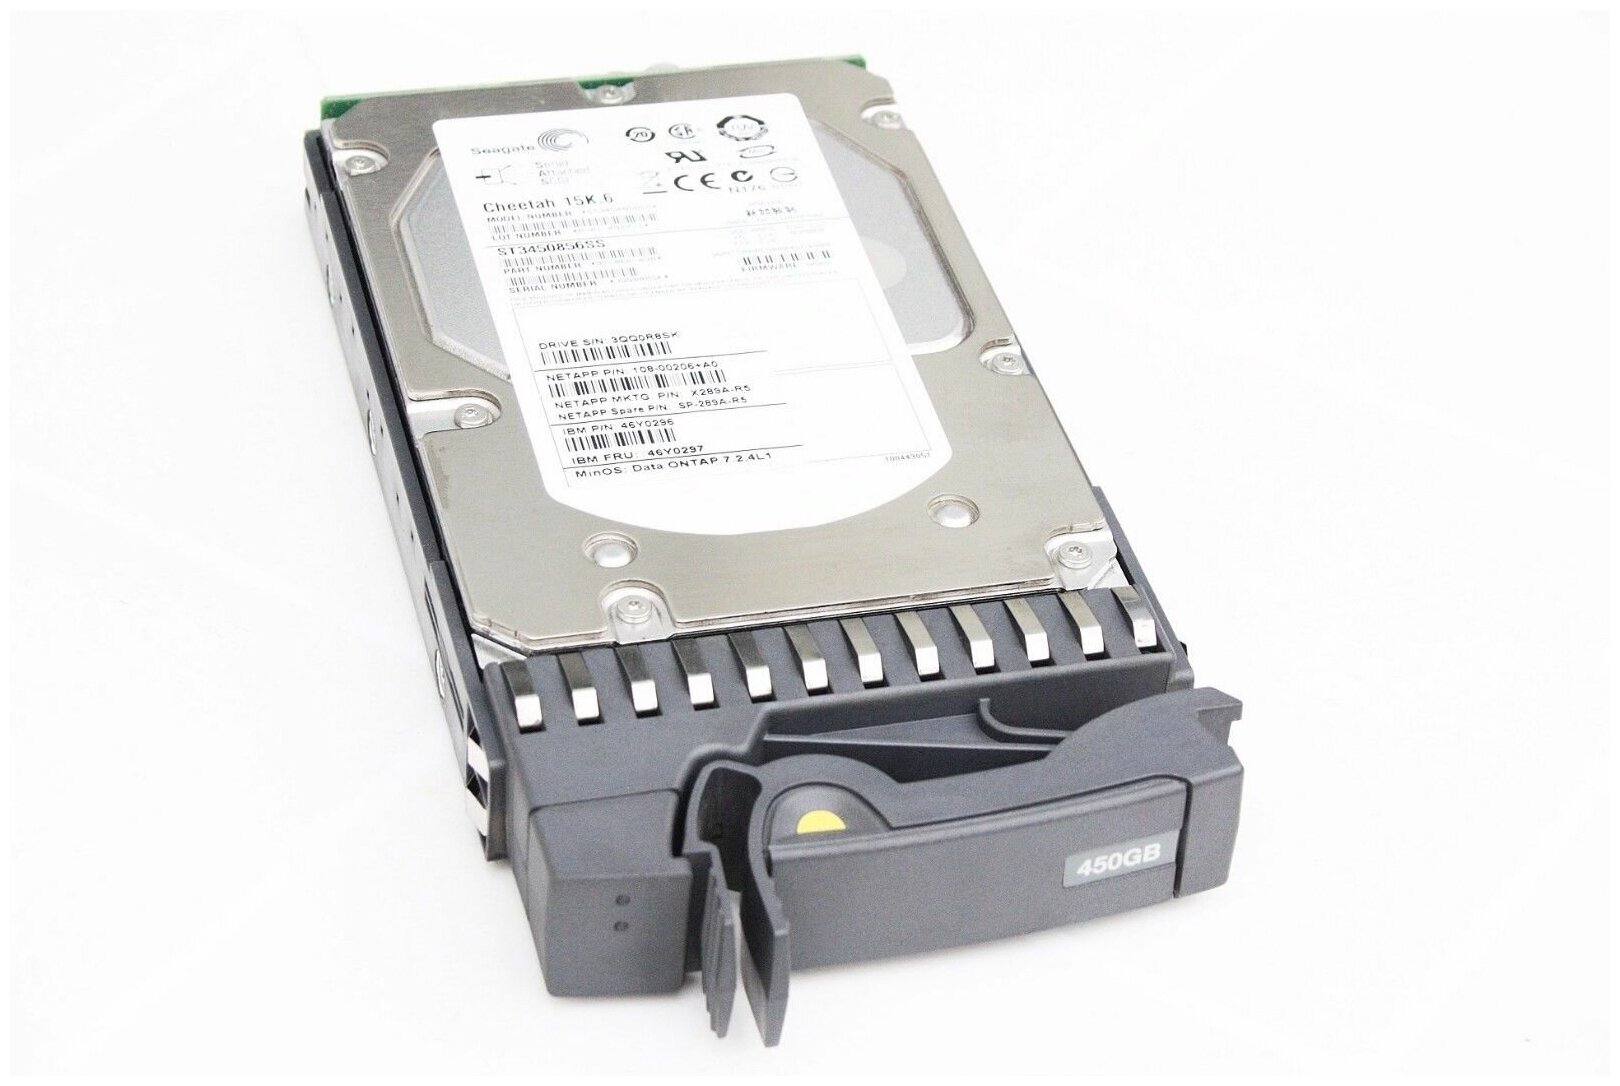 Жесткий диск NetApp 600GB 15K SAS HDD FAS2050 [SP-290A-R6]